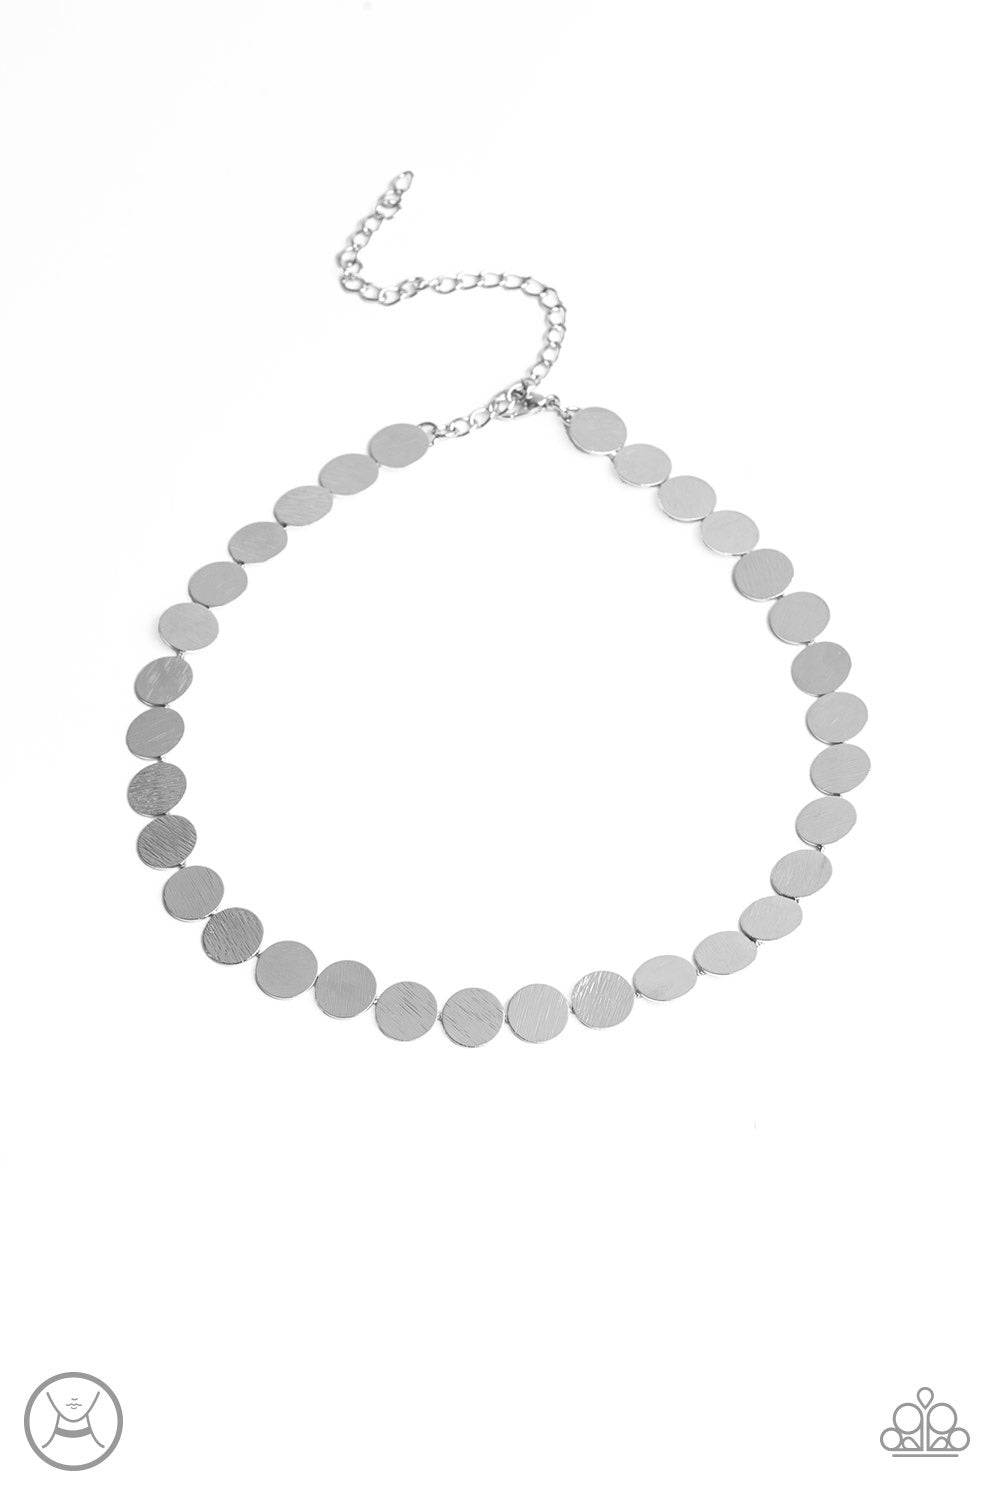 Spot Check Silver-Choker Necklace